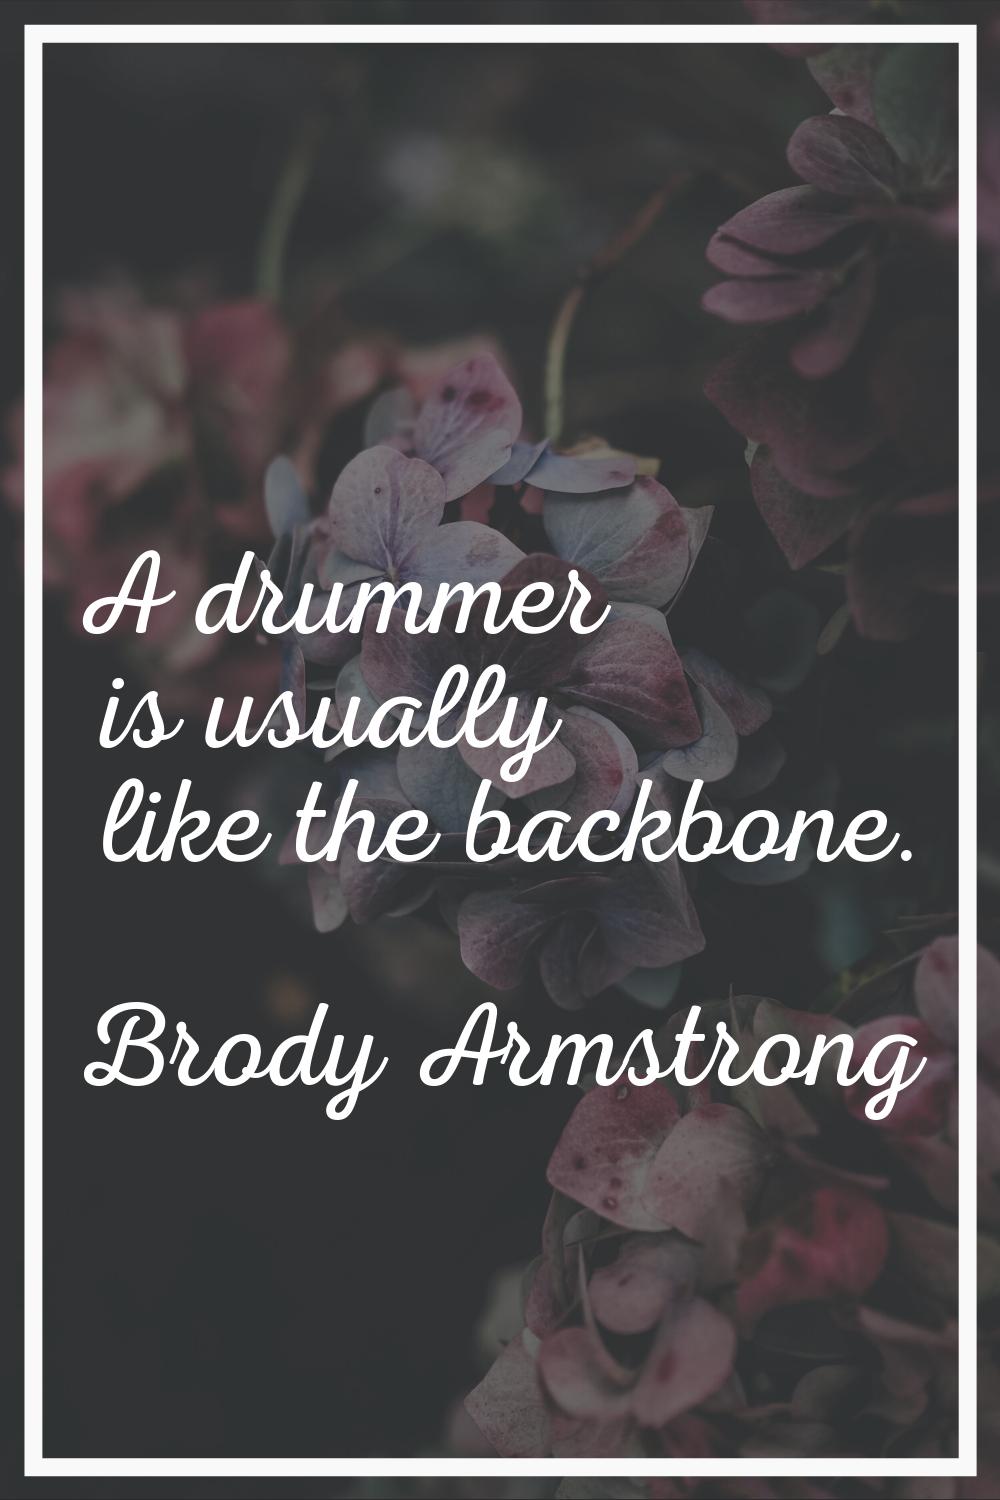 A drummer is usually like the backbone.